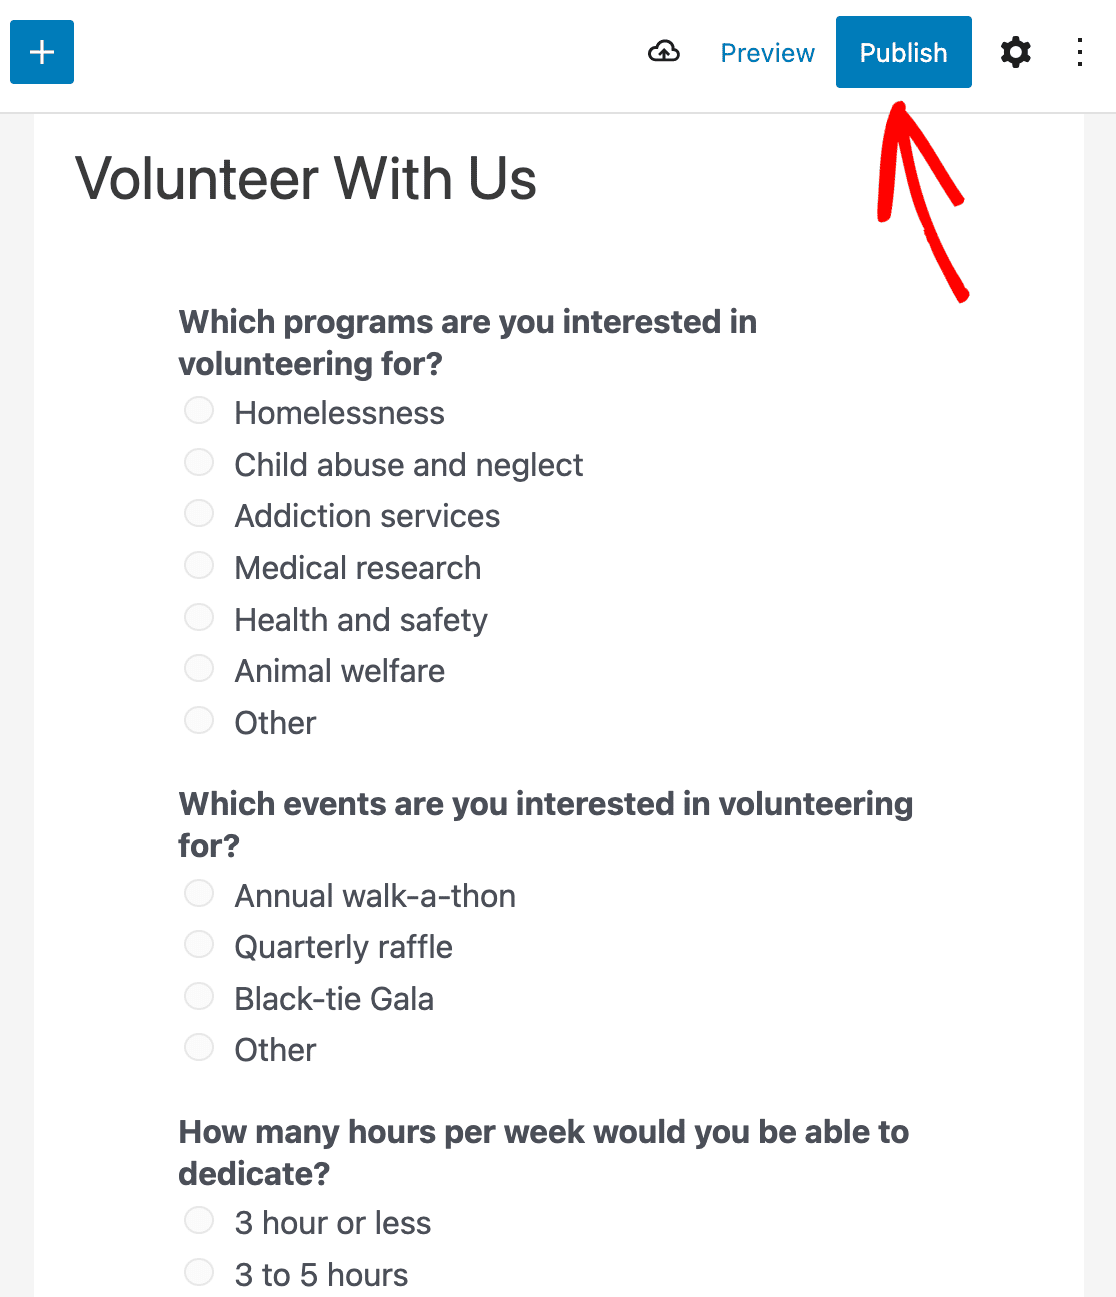 Publishing your volunteer recruitment form